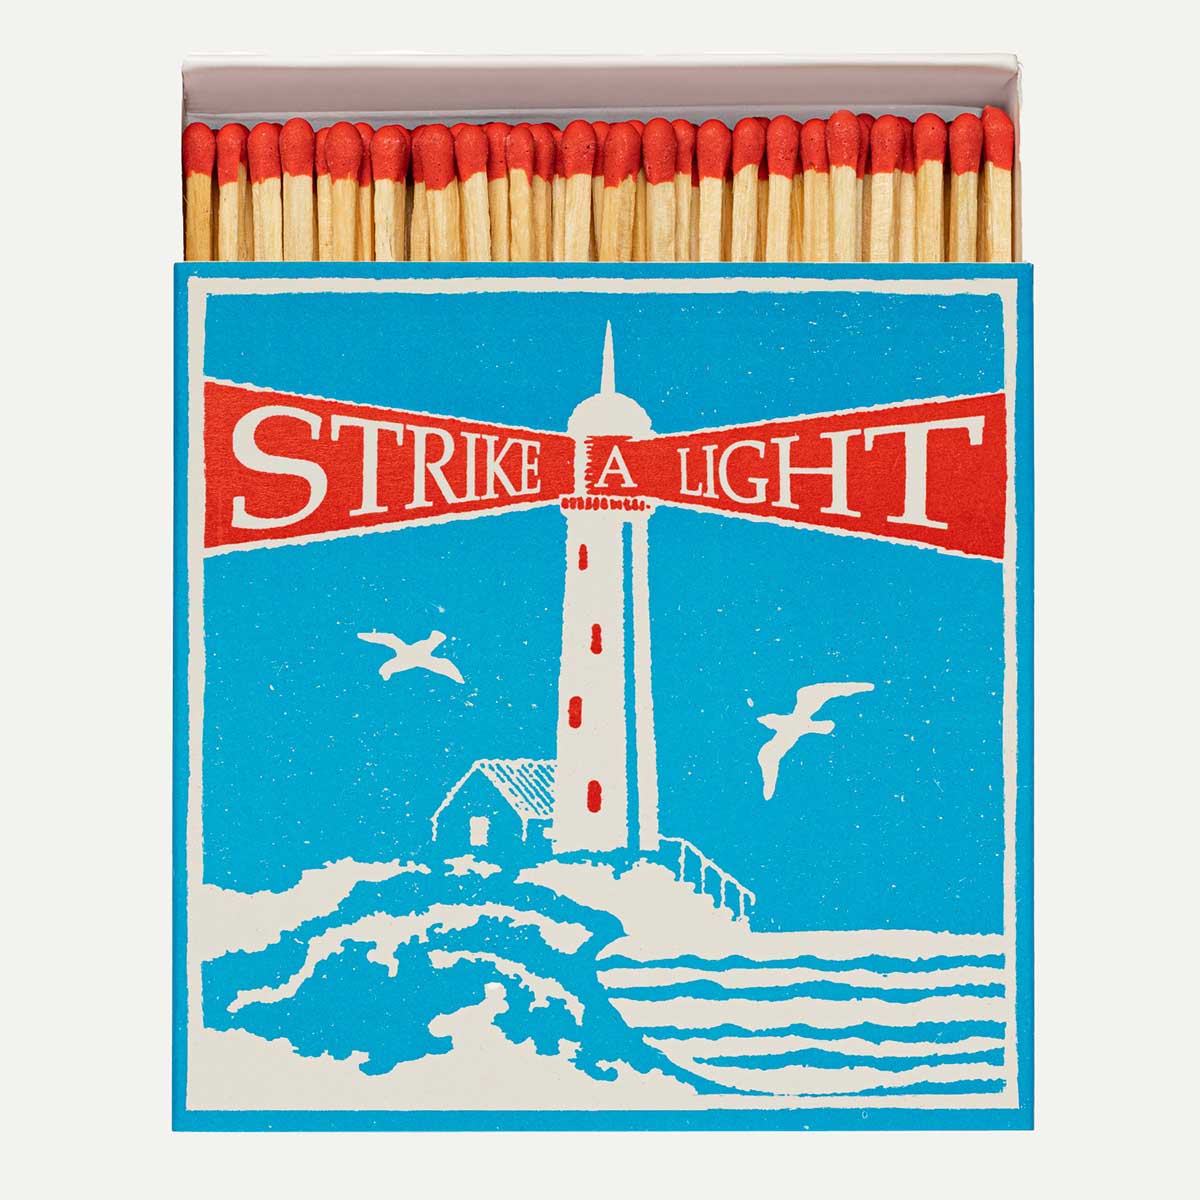 Archivist Lighthouse Safety Matches